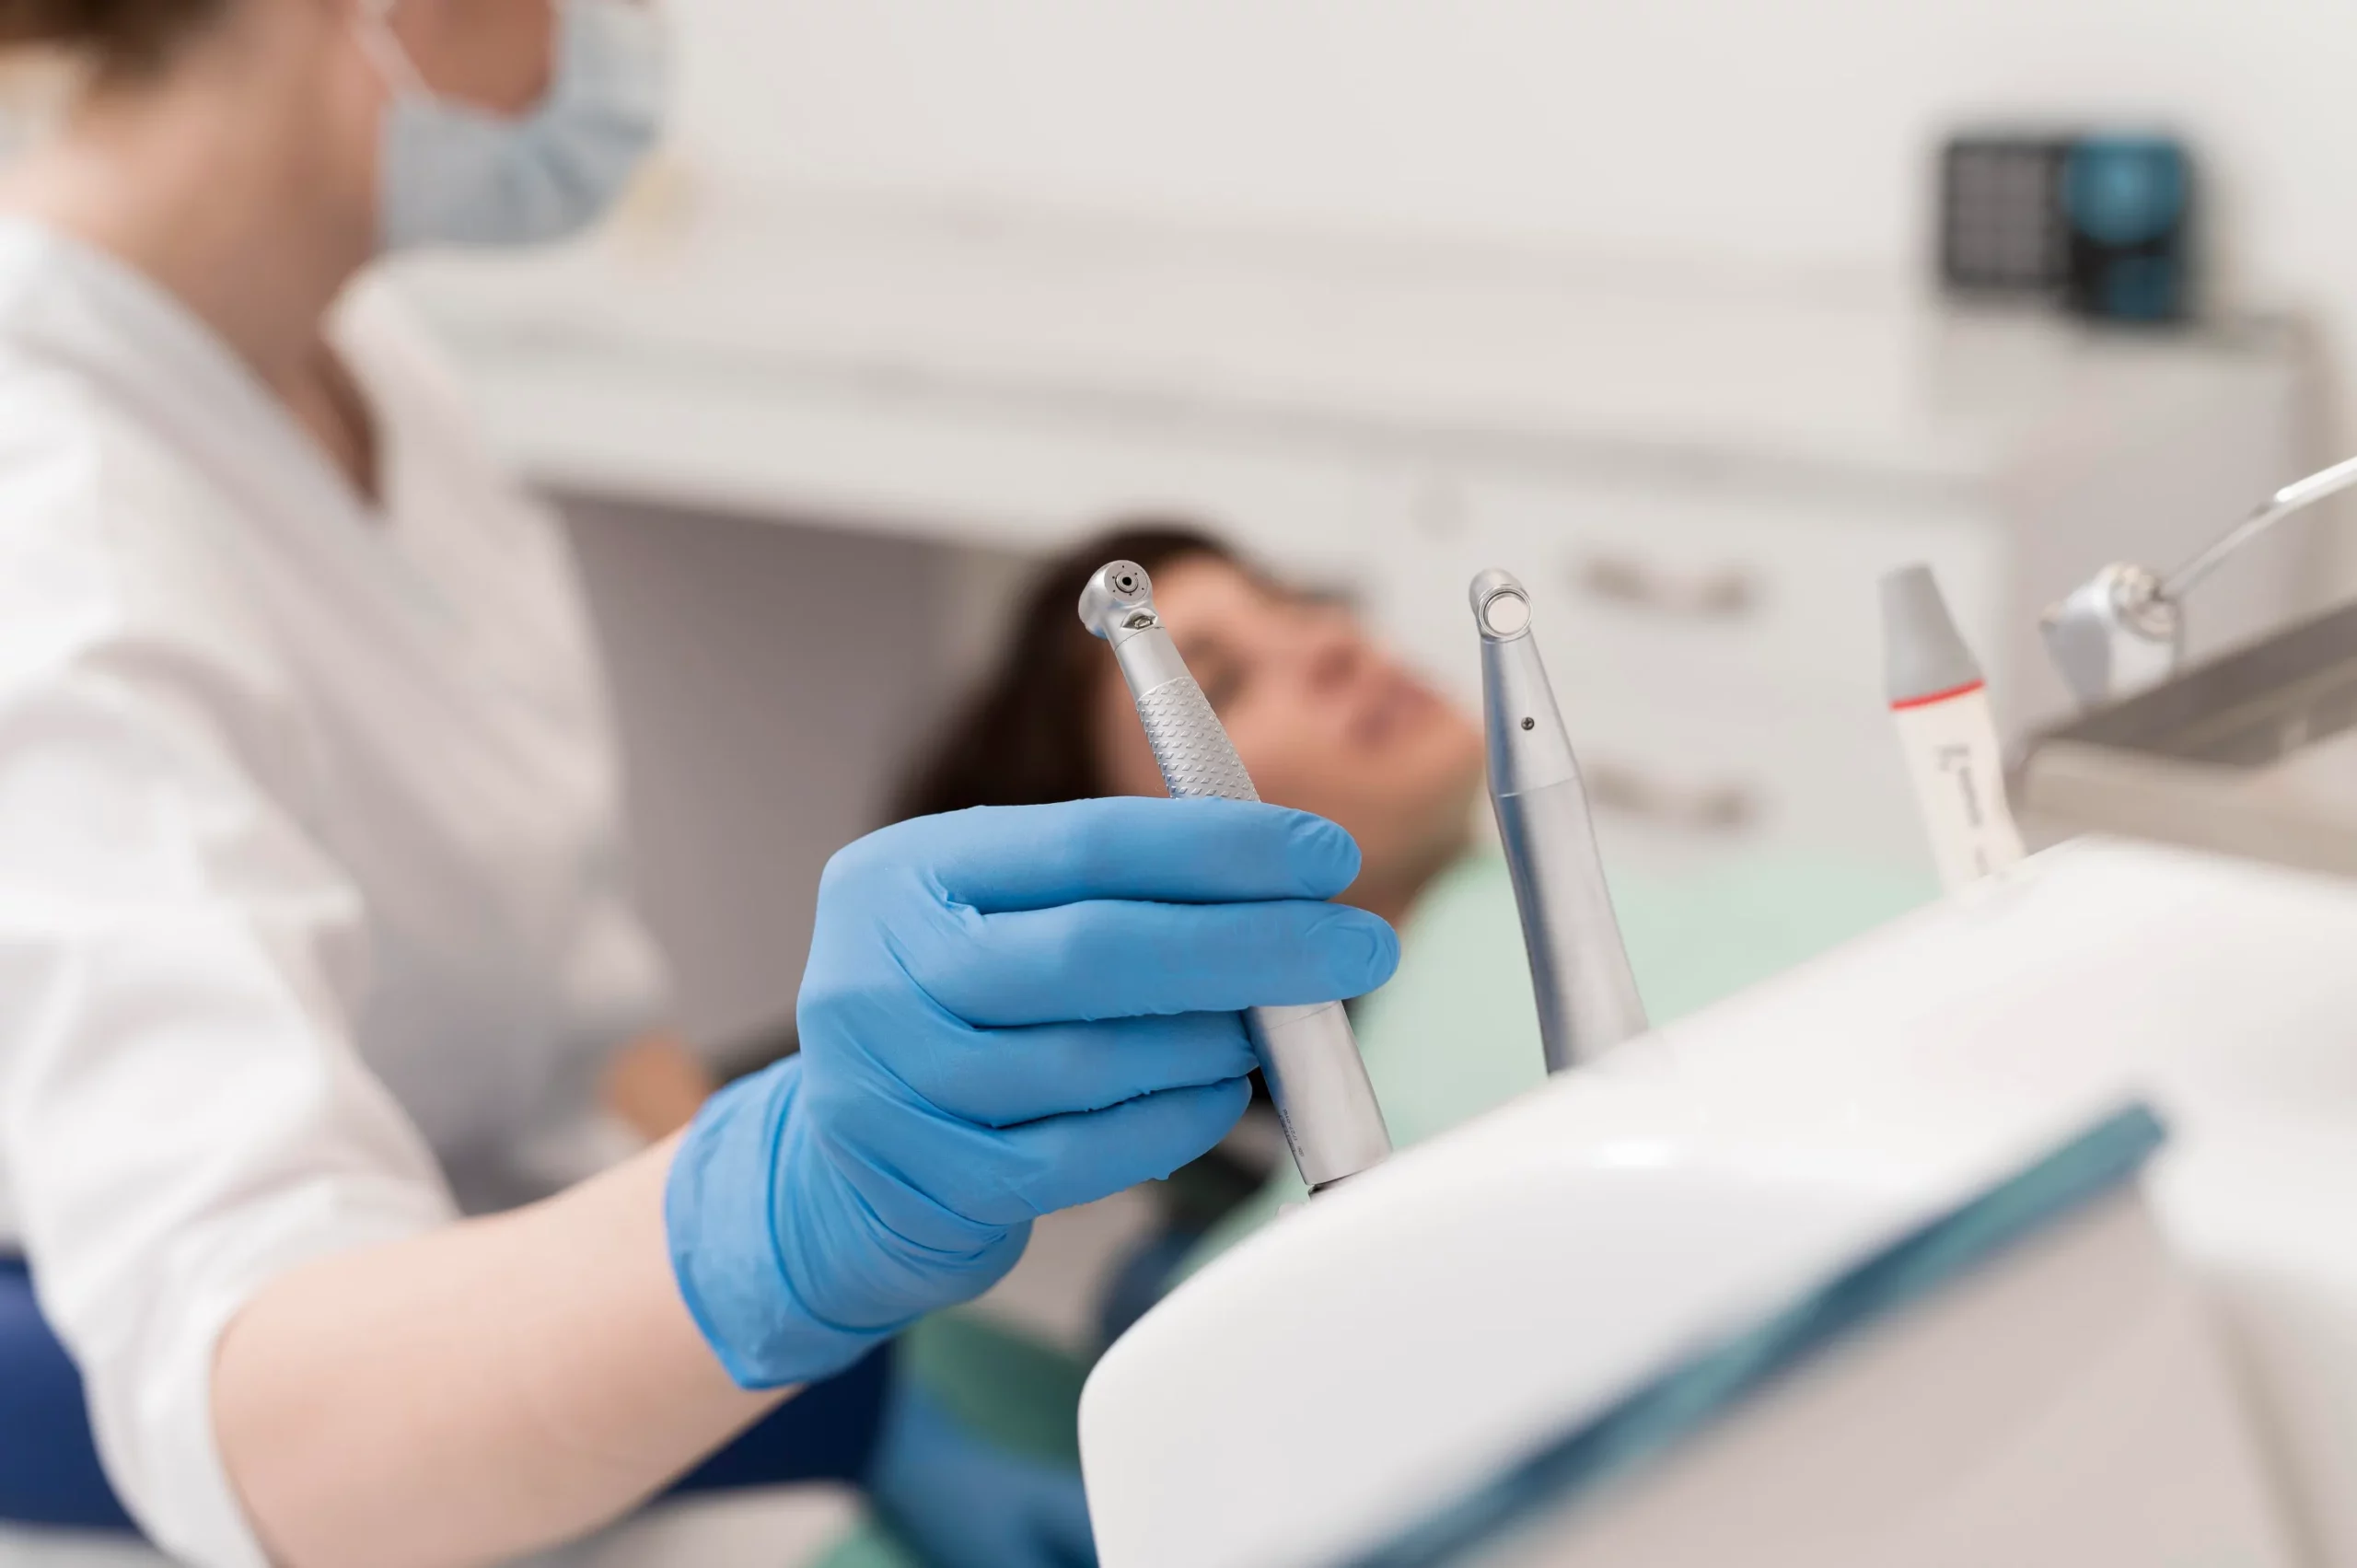 female-patient-having-procedure-done-dentist